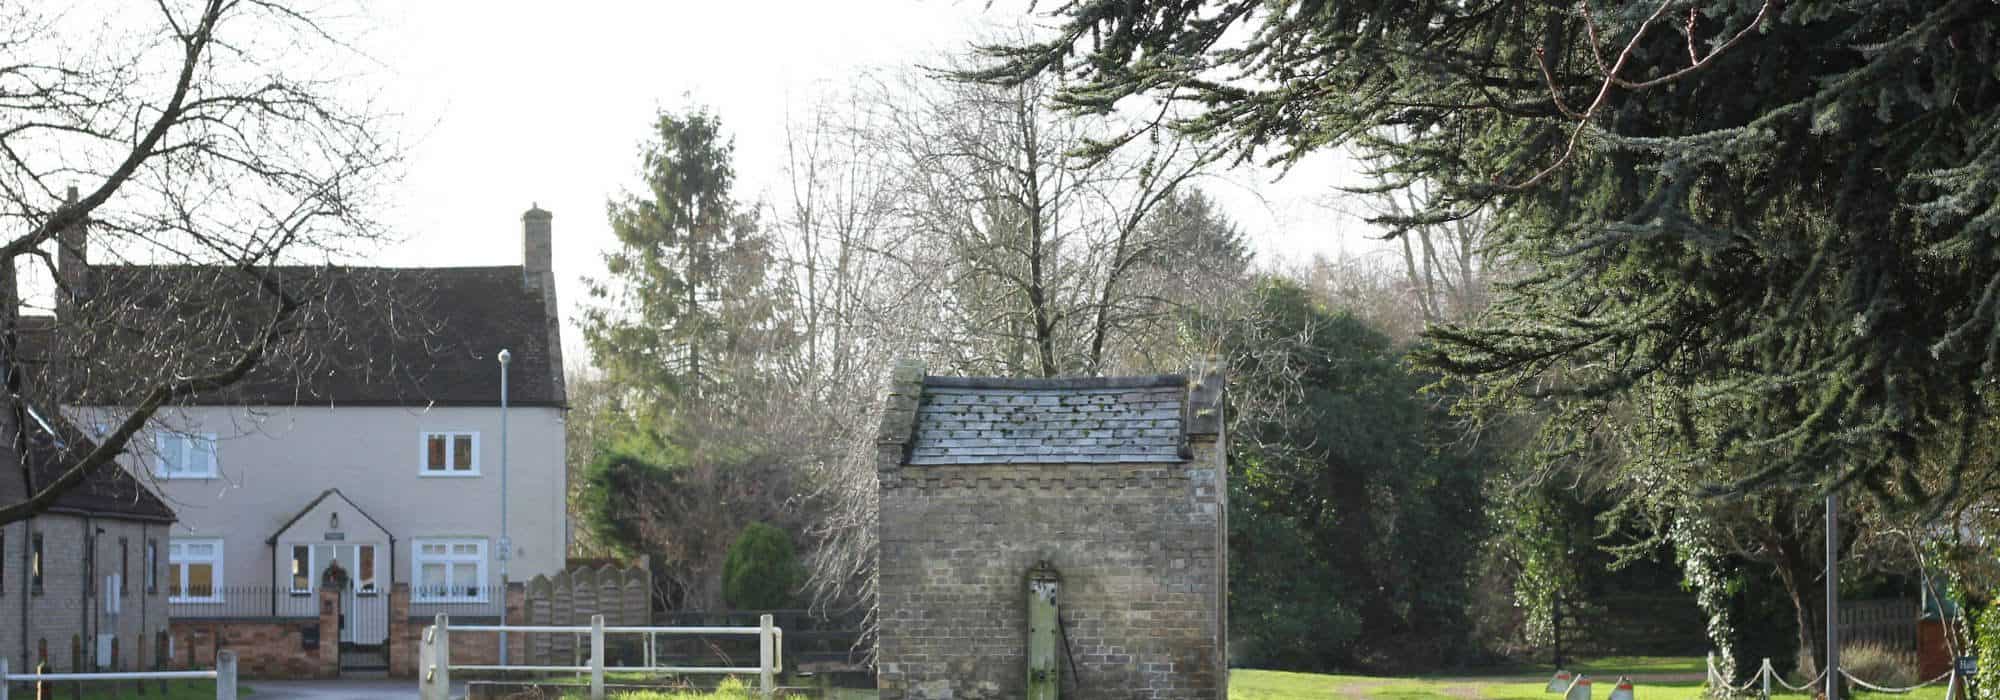 A view of Fen Drayton village hall